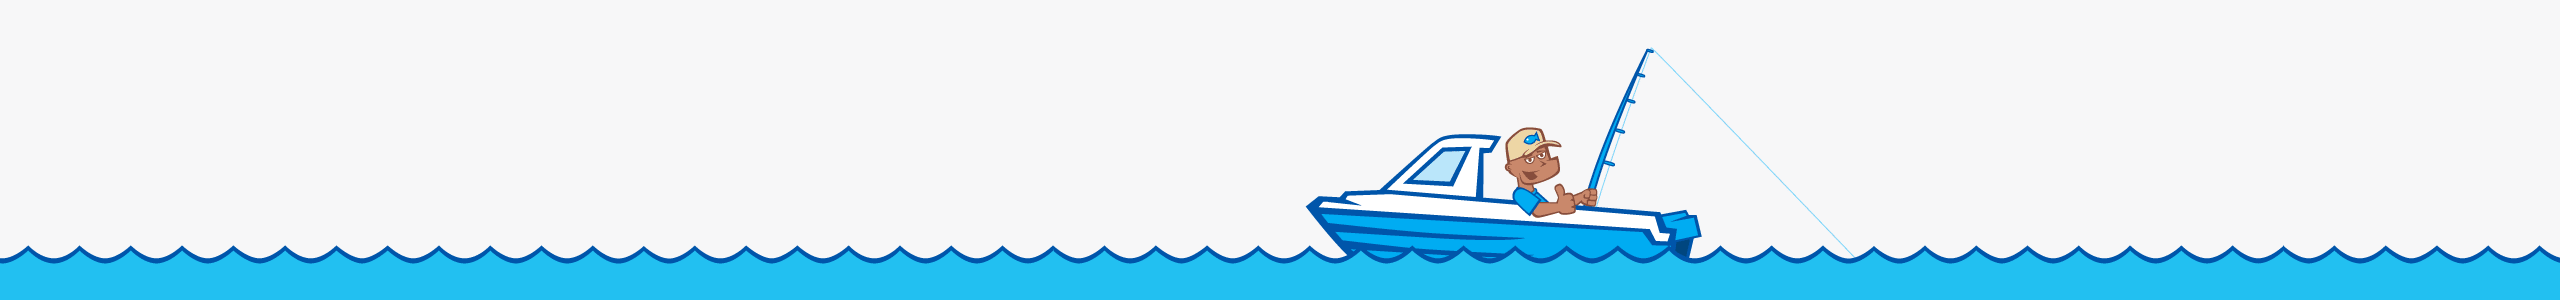 boat finance background